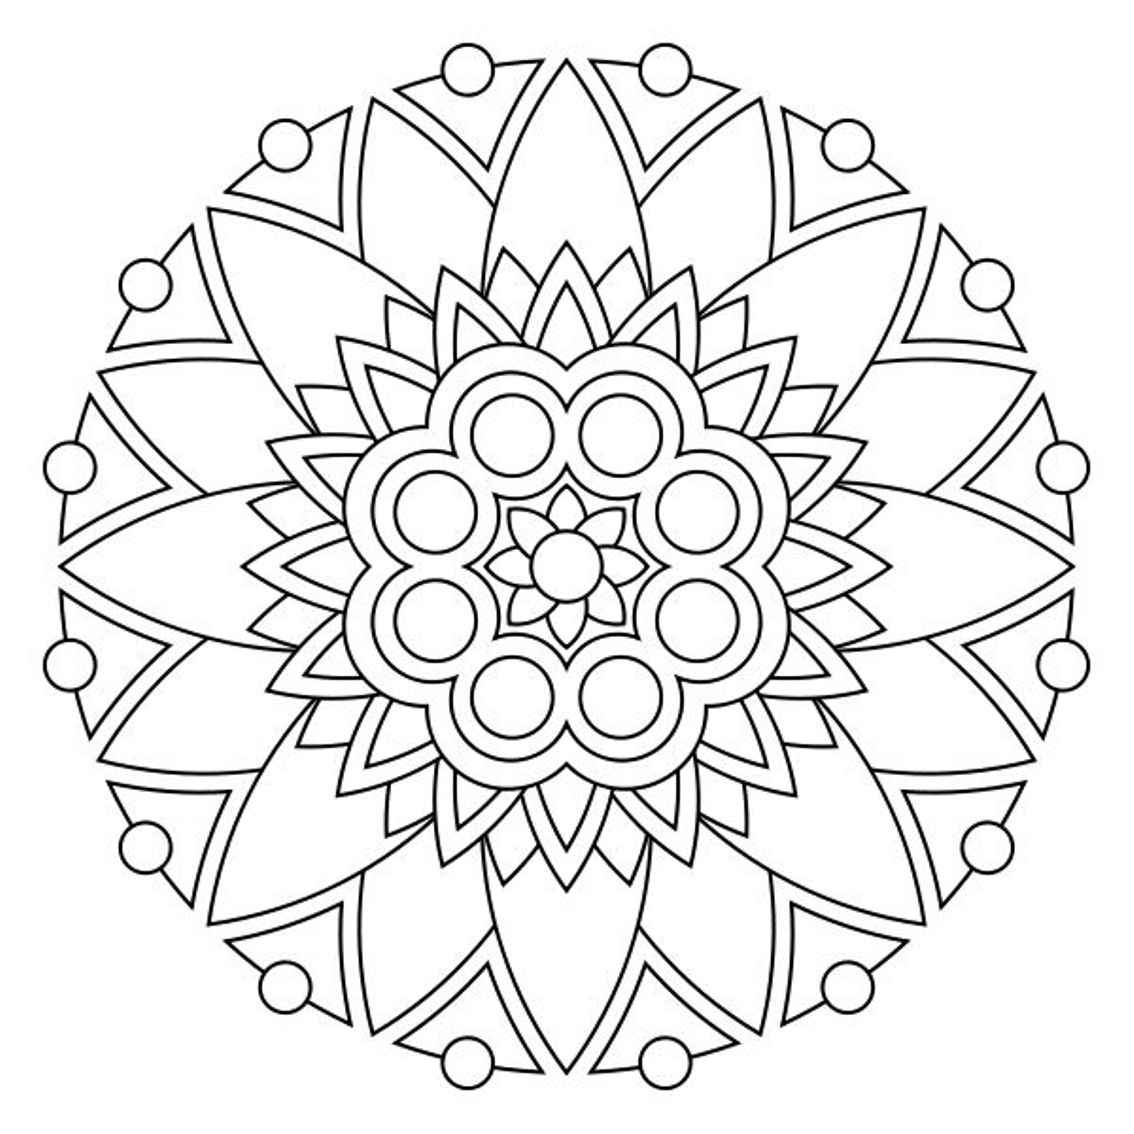 Drawing Flowers Mandalas 20 Mandalas – Printable coloring pages